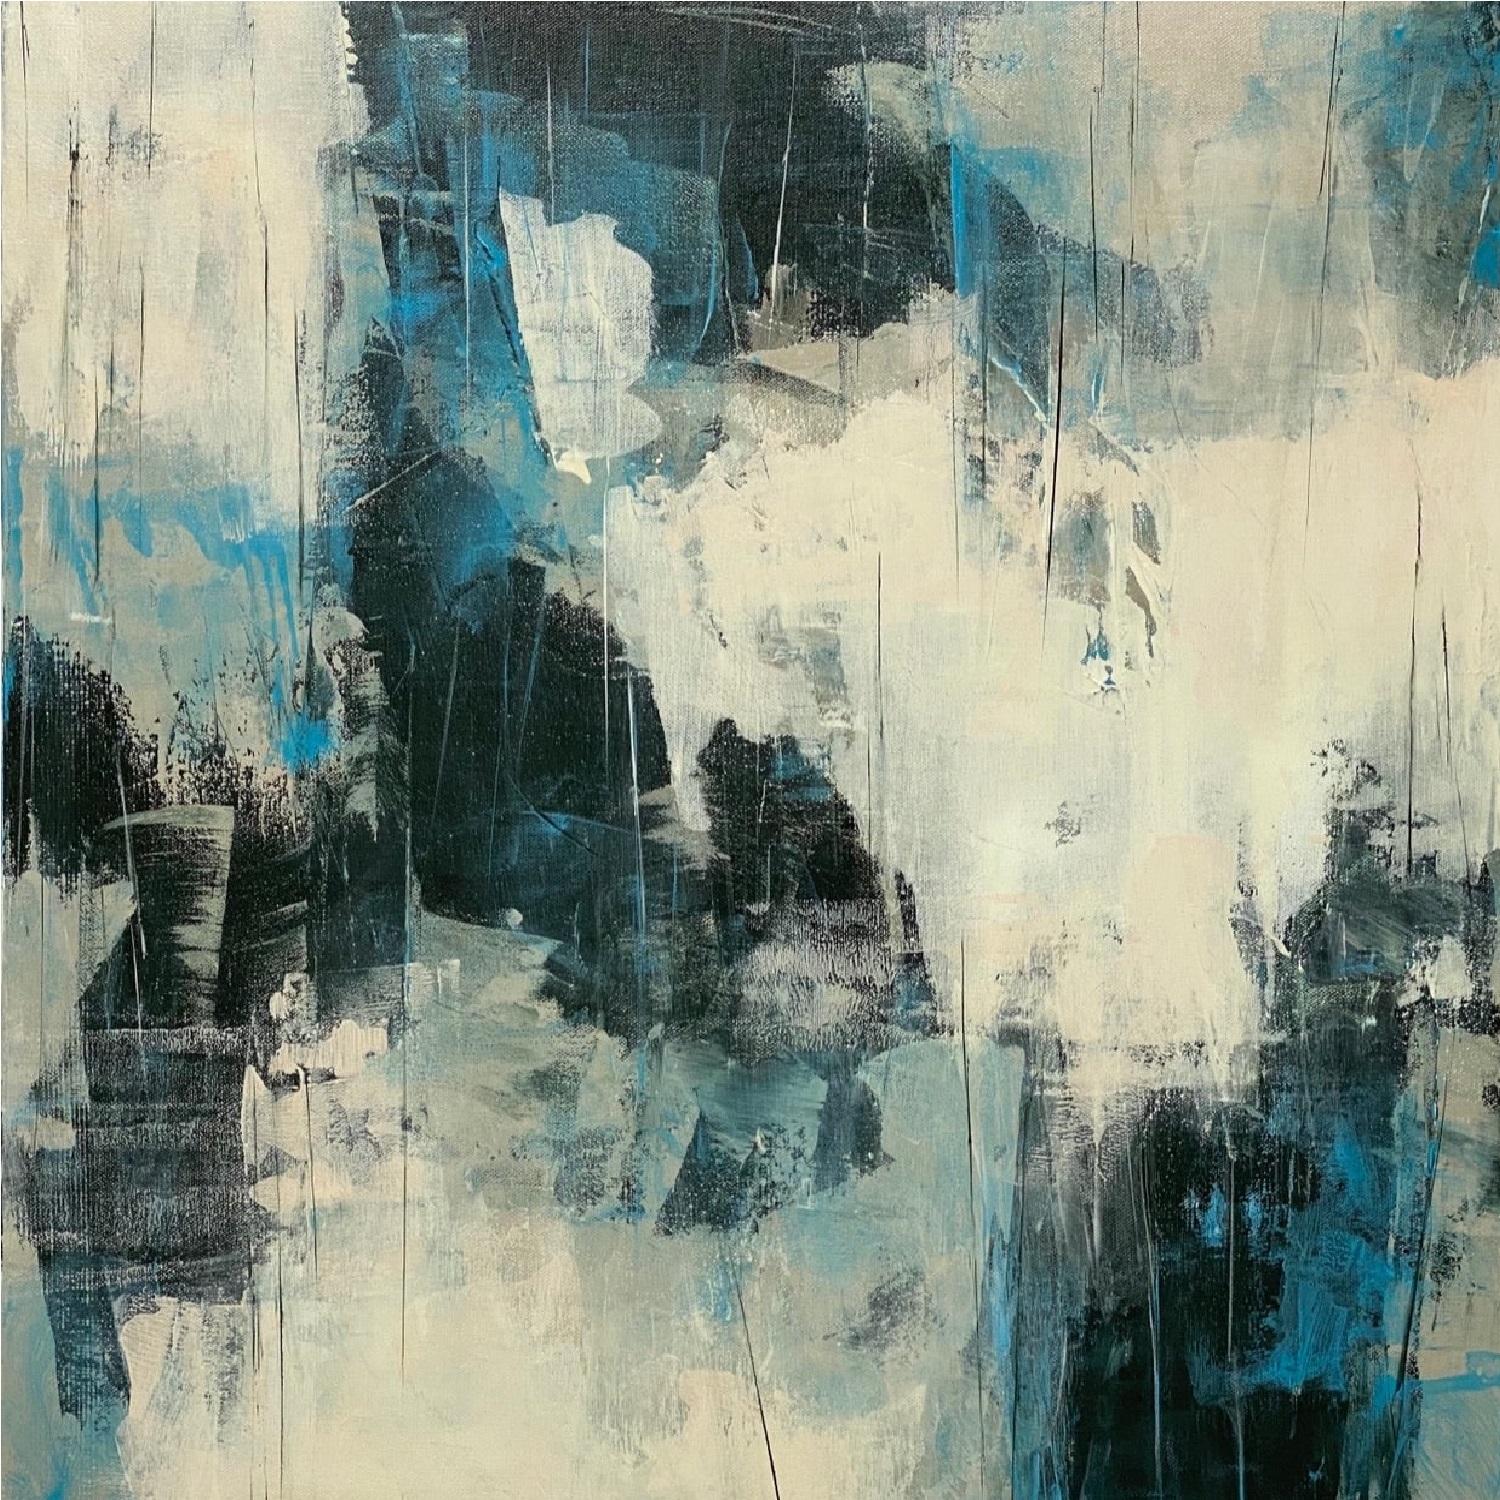 Juanita Bellavance  Abstract Painting – Cutting Edge, blau, schwarz, weiß, grau, abstrakter Expressionismus